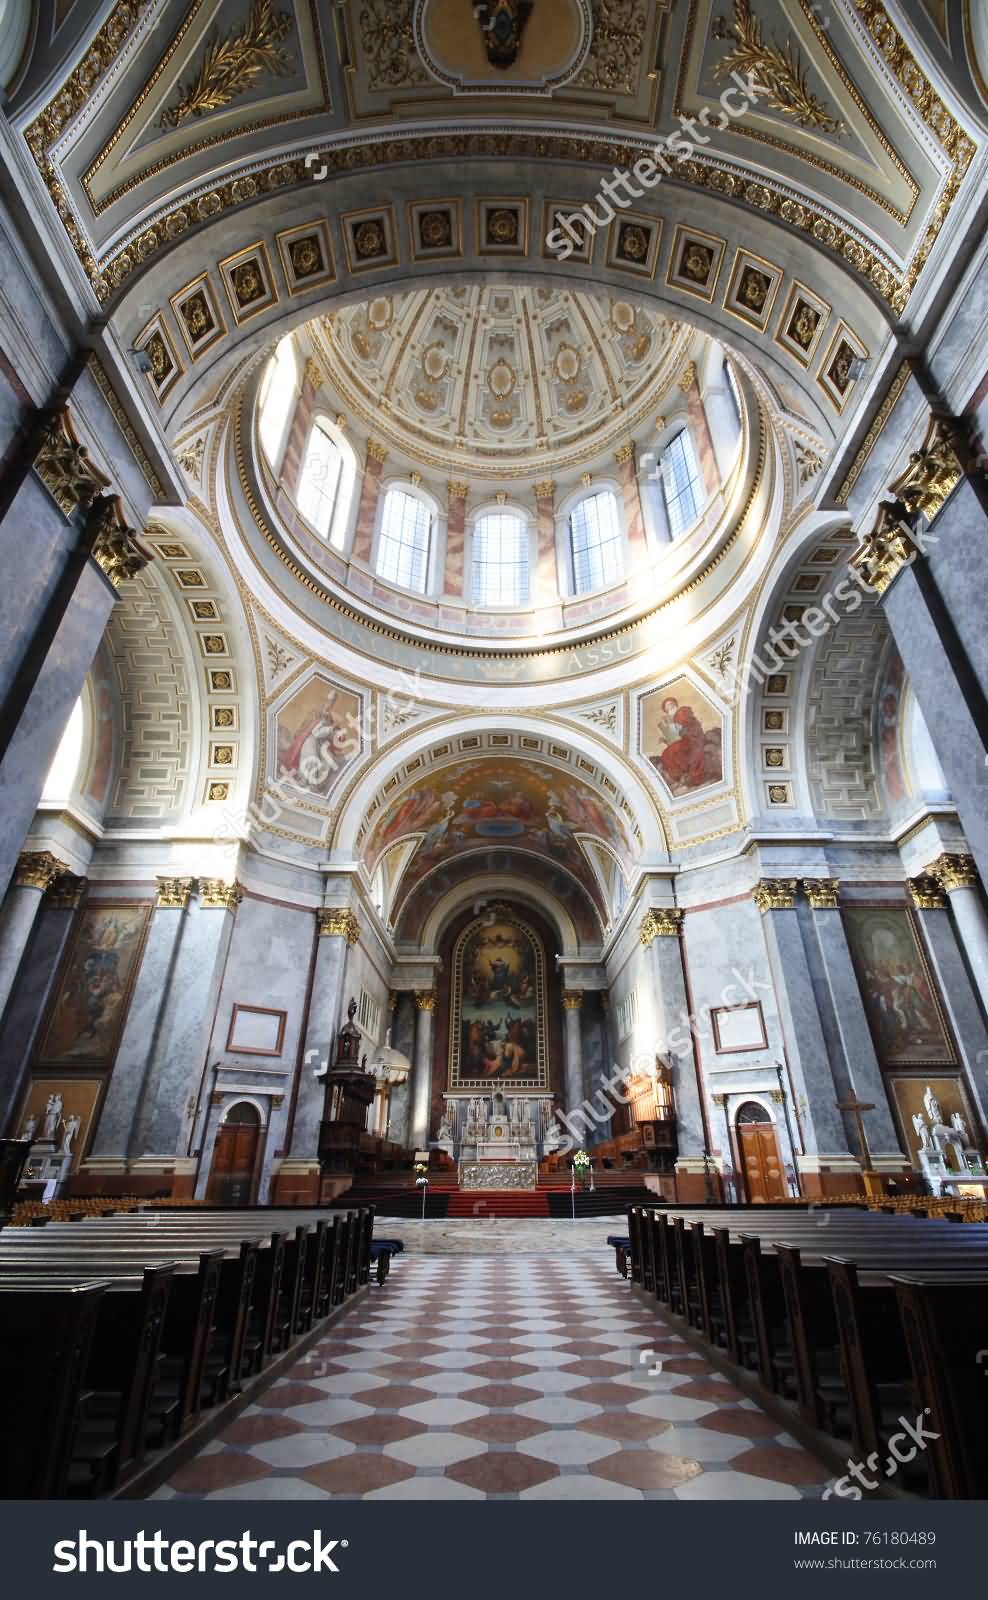 Altar Inside The Esztergom Basilica In Hungary